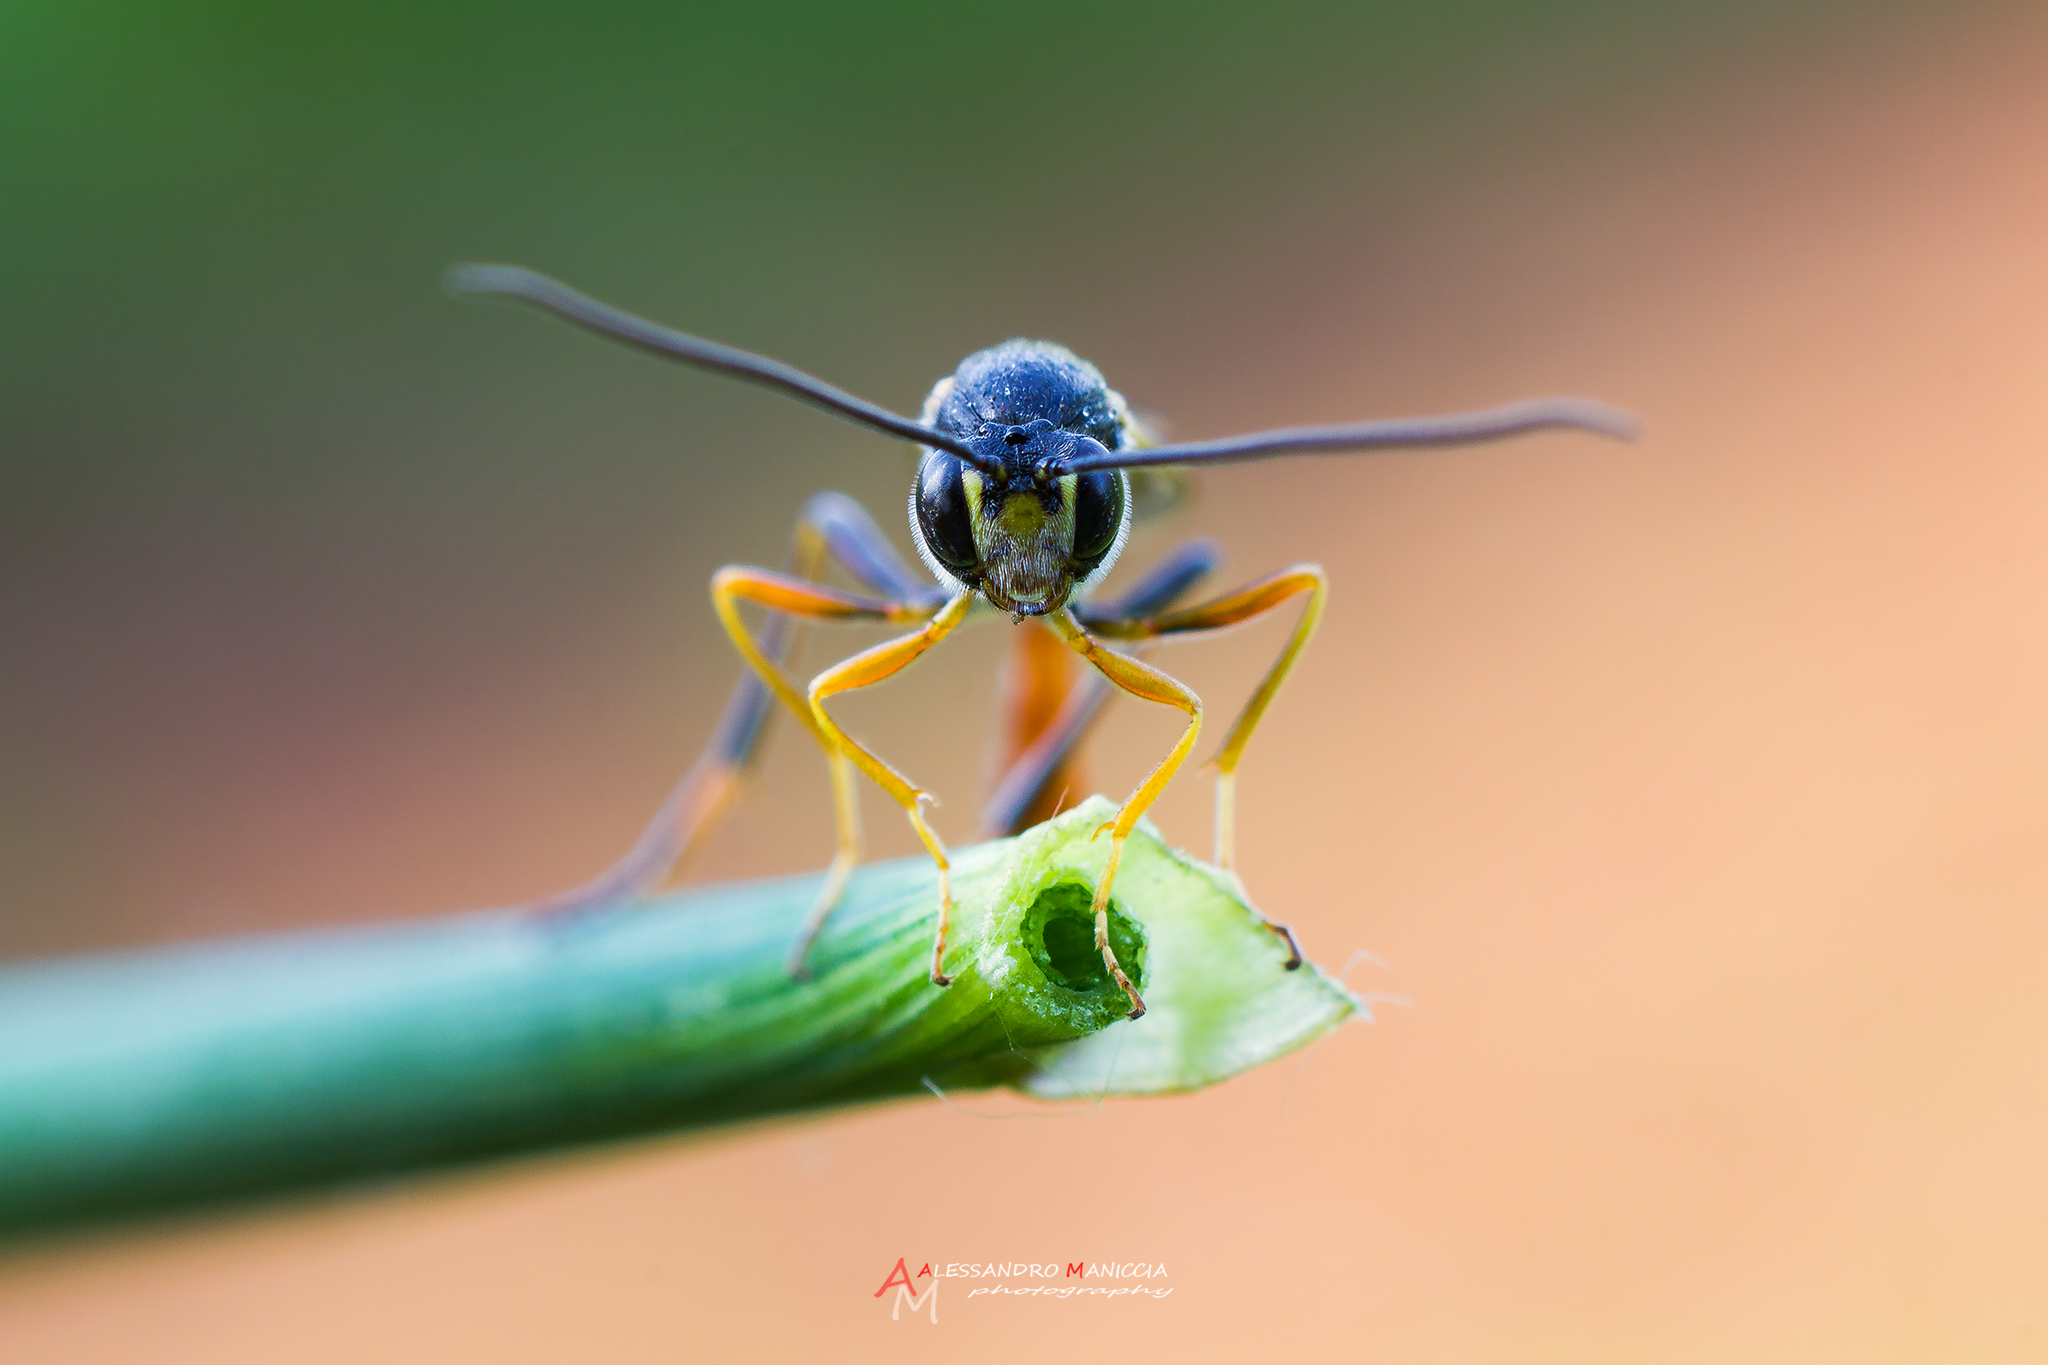 ammophila wasp...